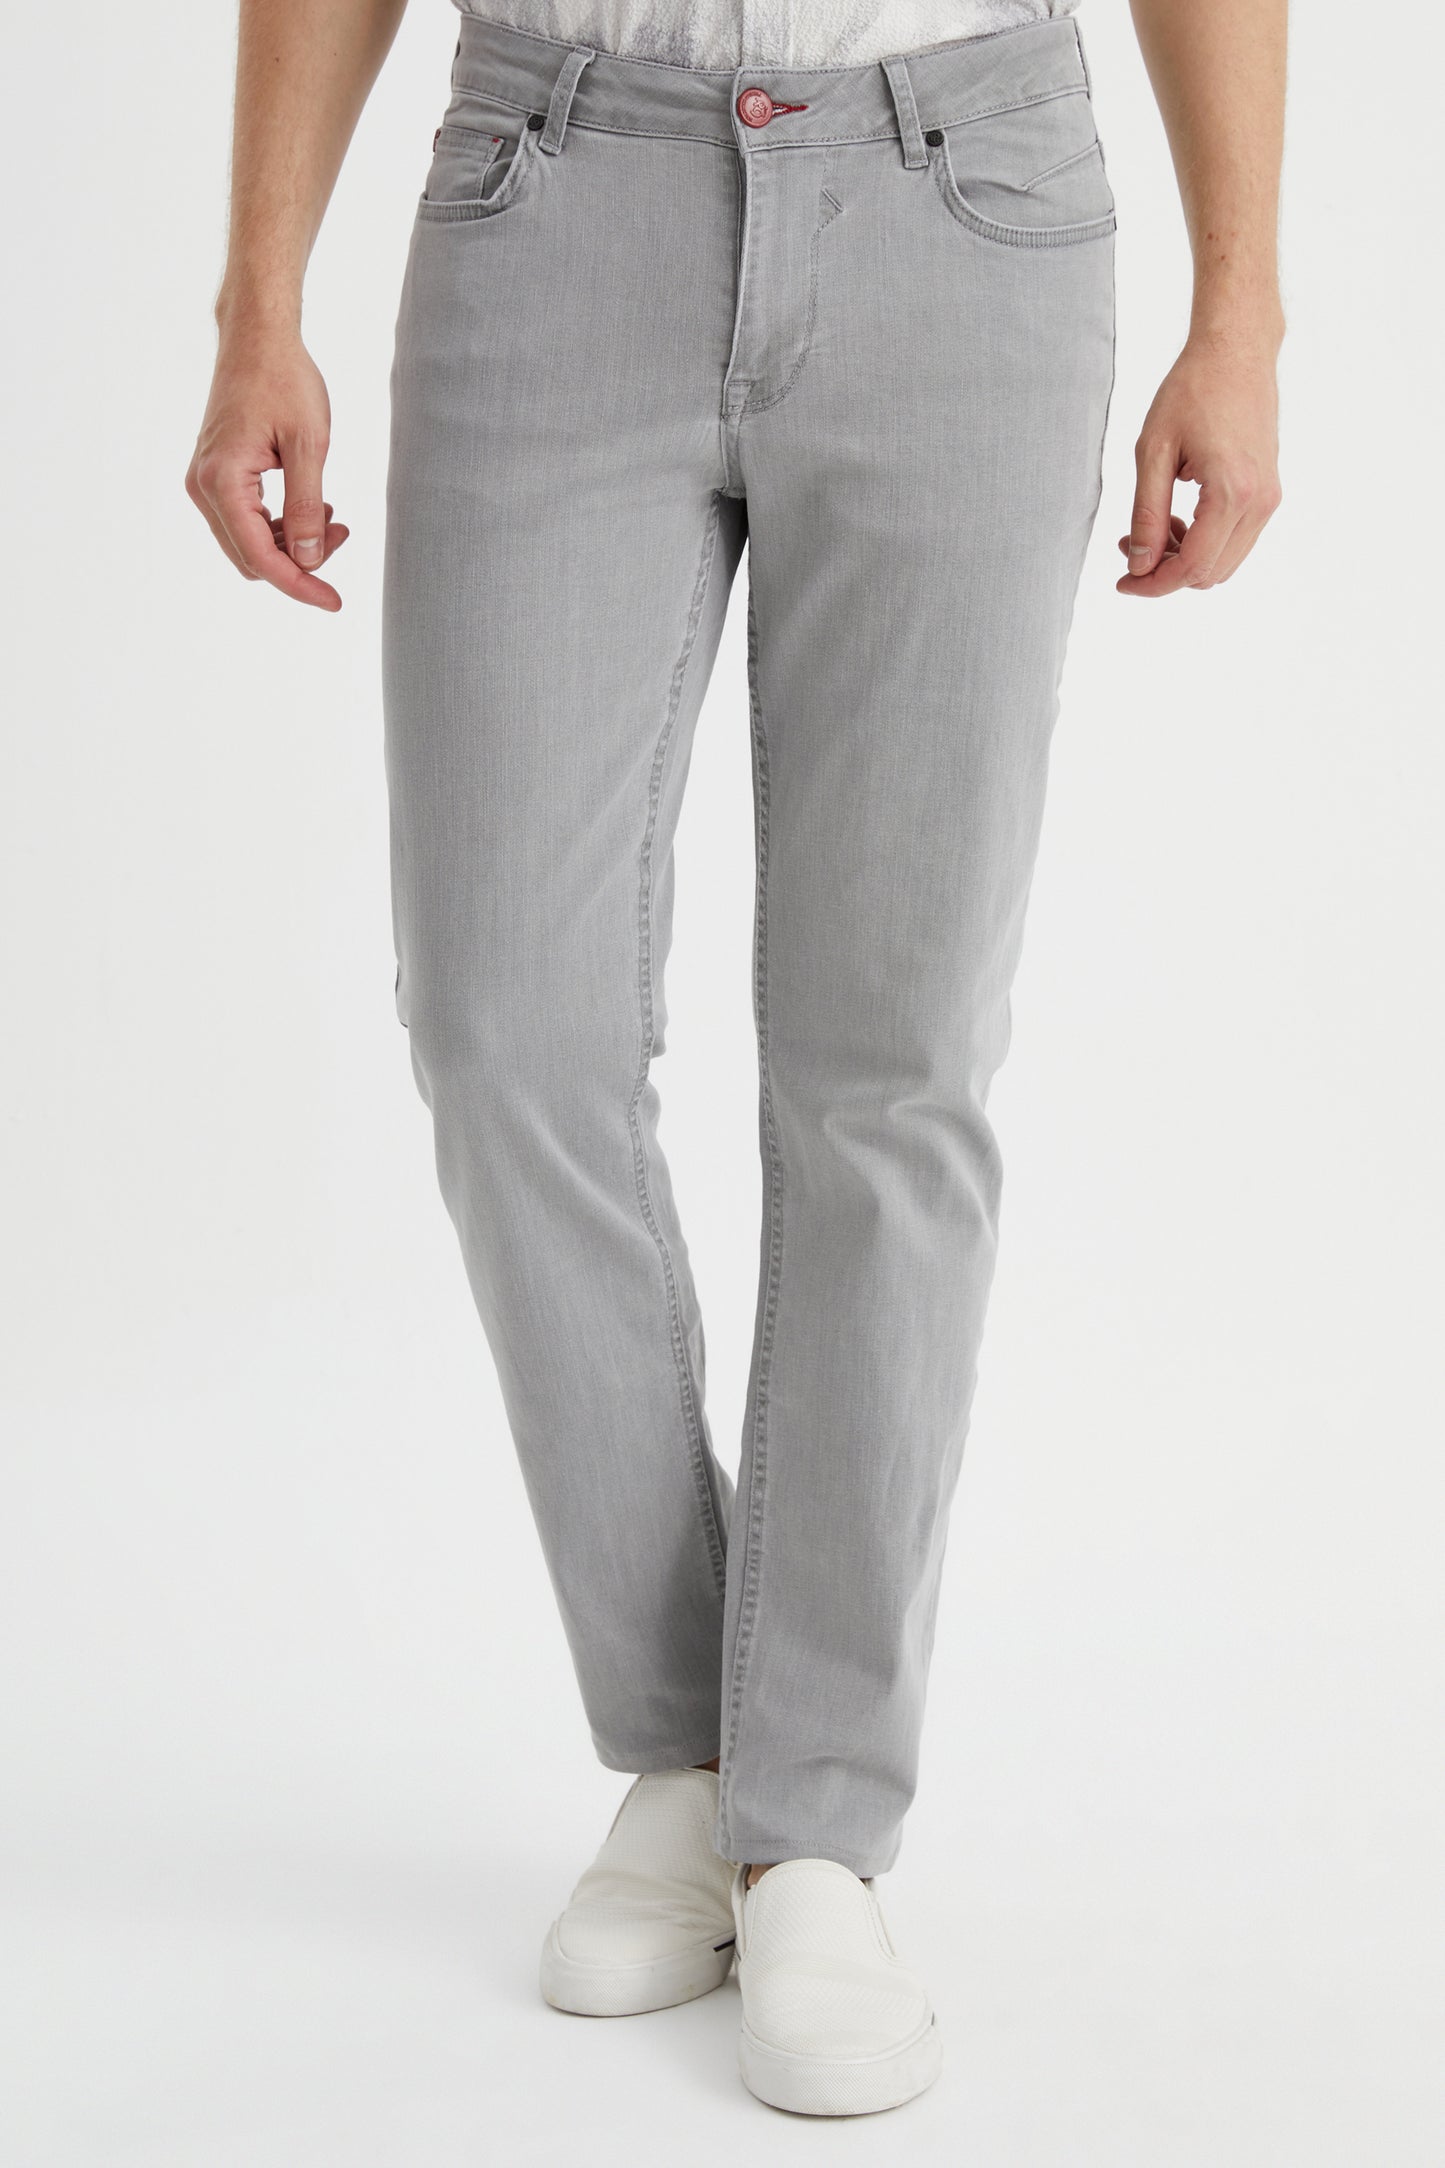 DFR89 Jeans - Brunello/Light Grey